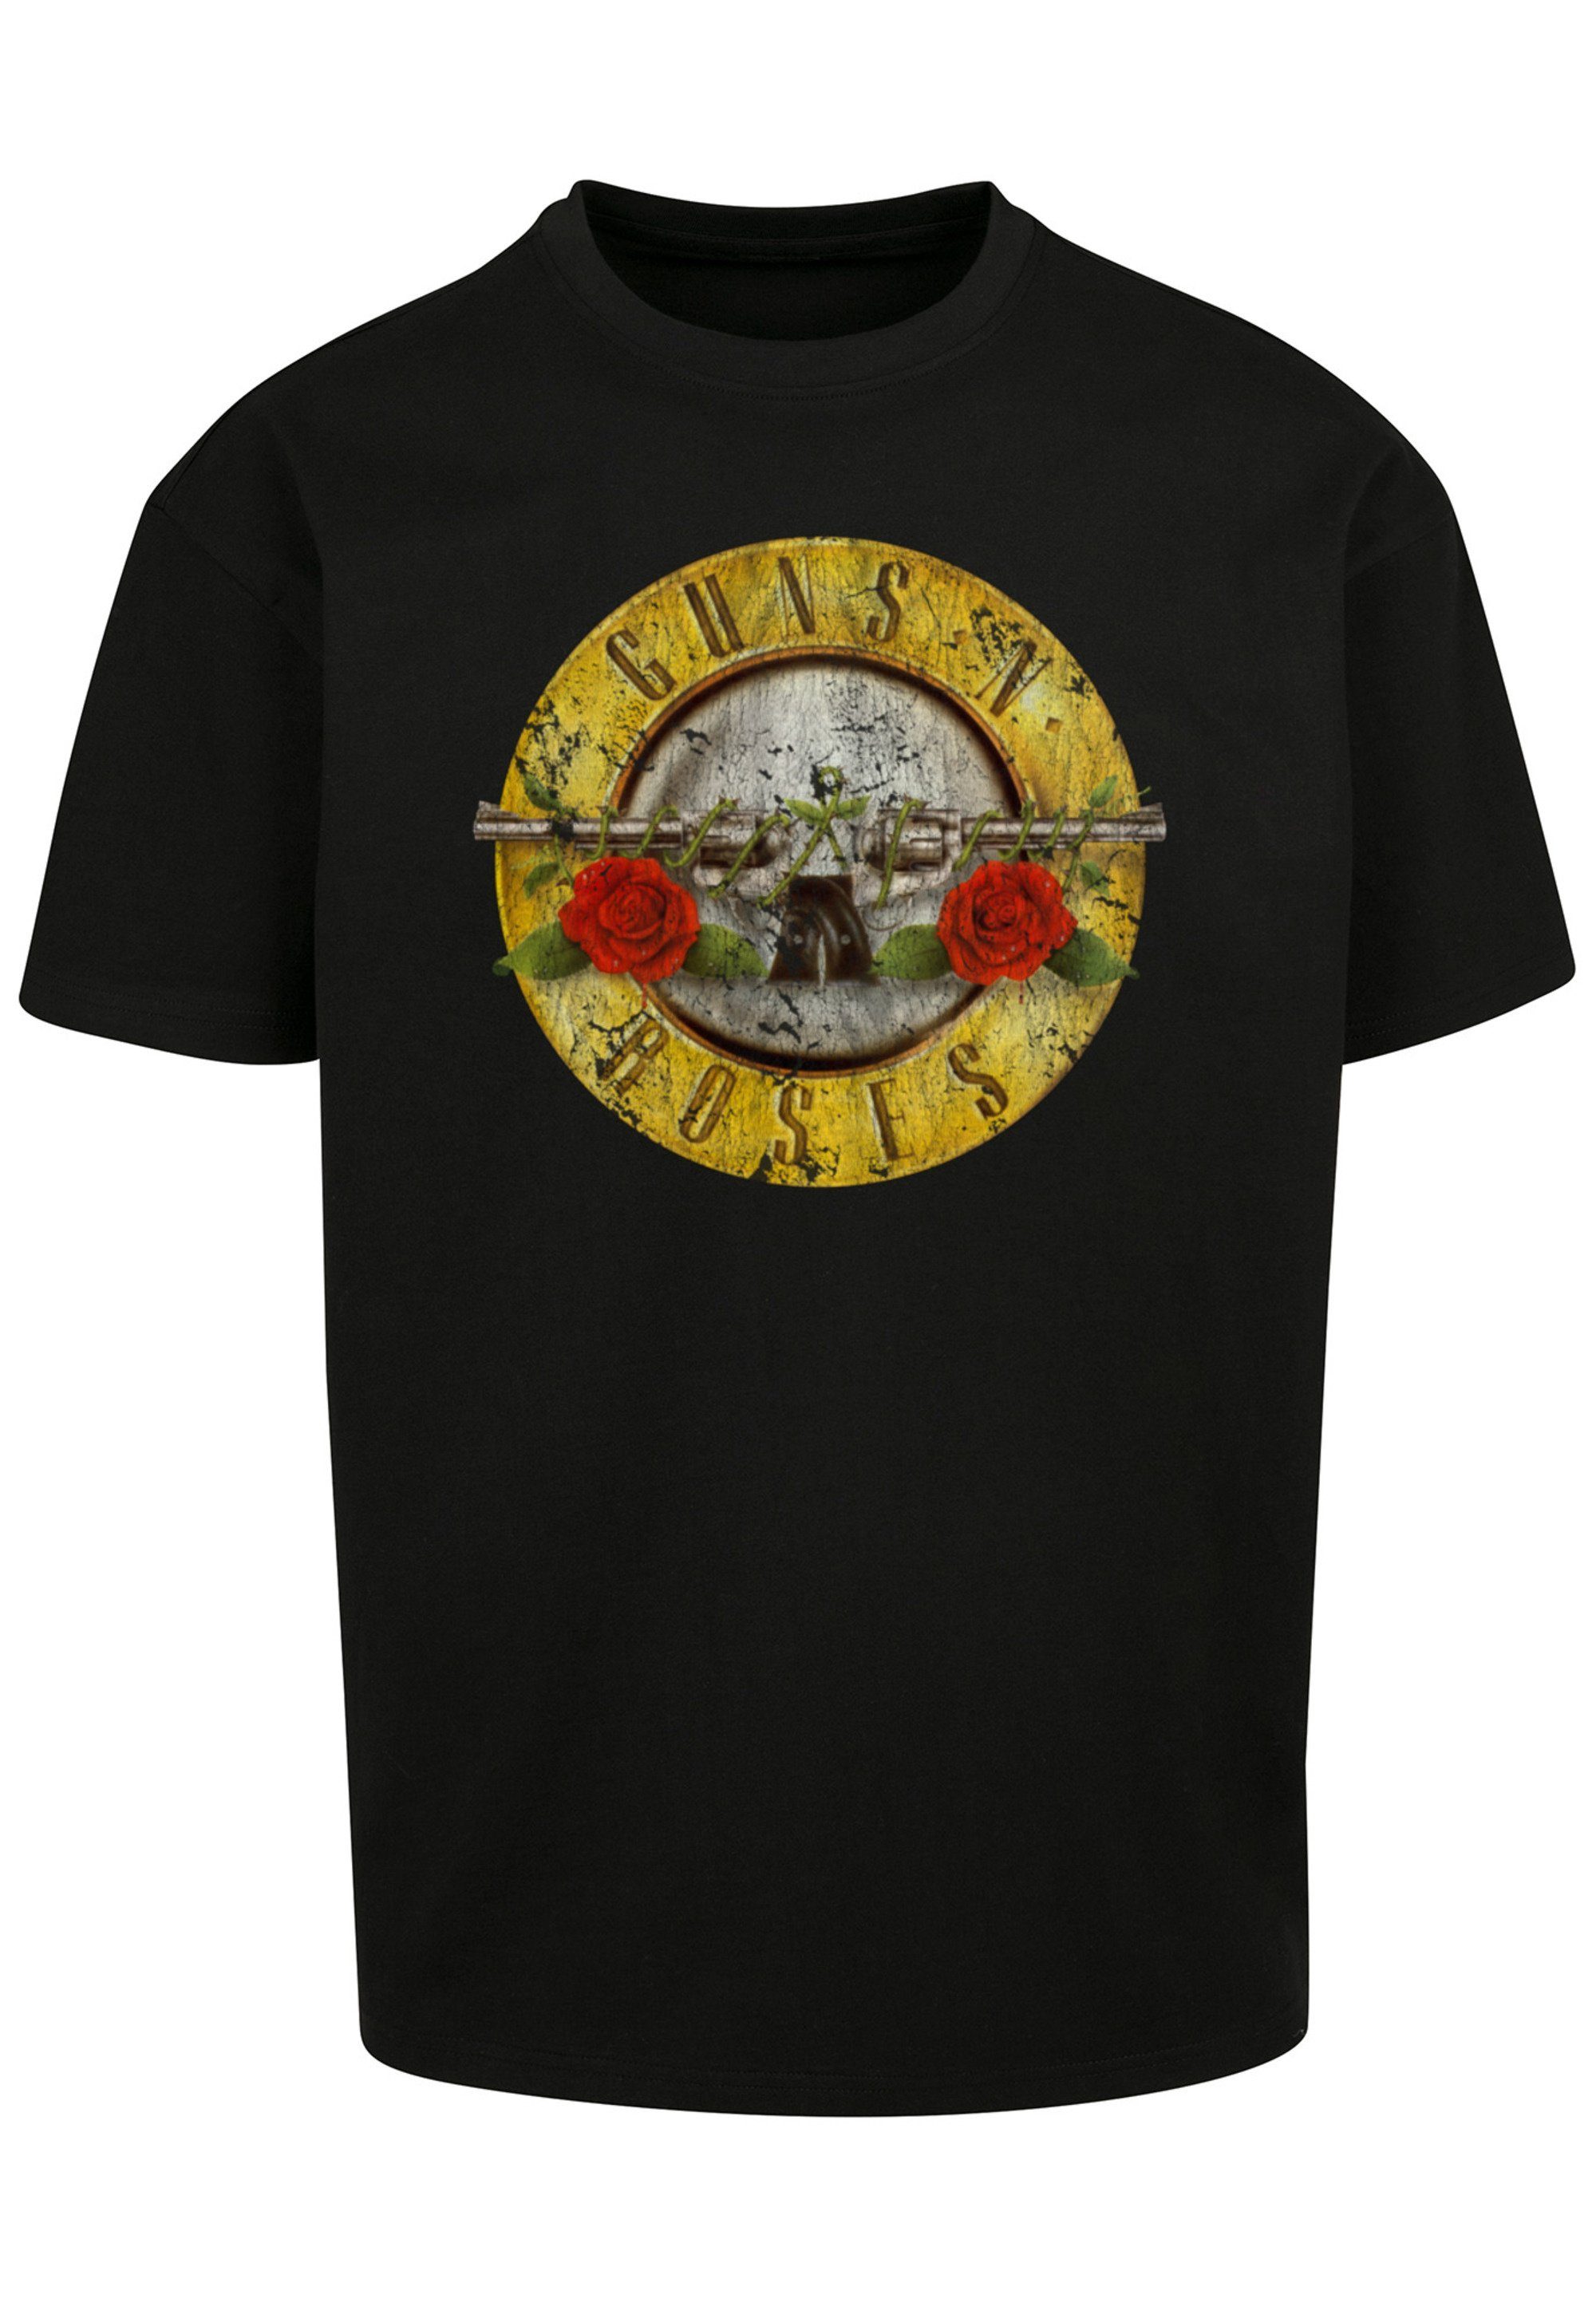 (Distressed) Roses F4NT4STIC Band 'n' T-Shirt Vintage schwarz Black Logo Classic Guns Print